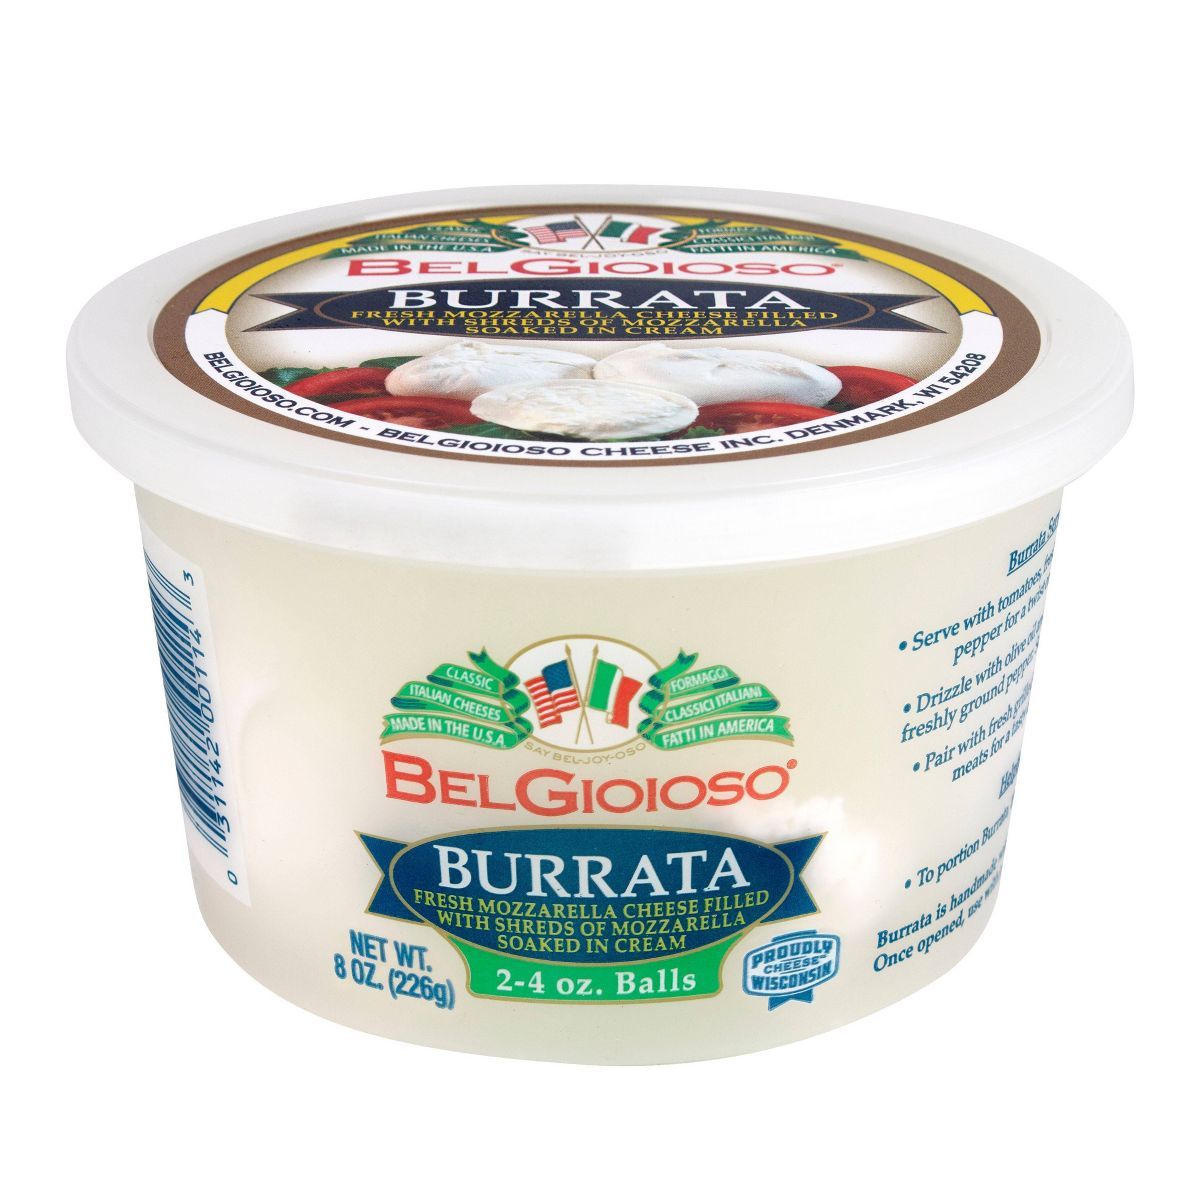 BelGioioso Burrata Cheese - 8oz | Target